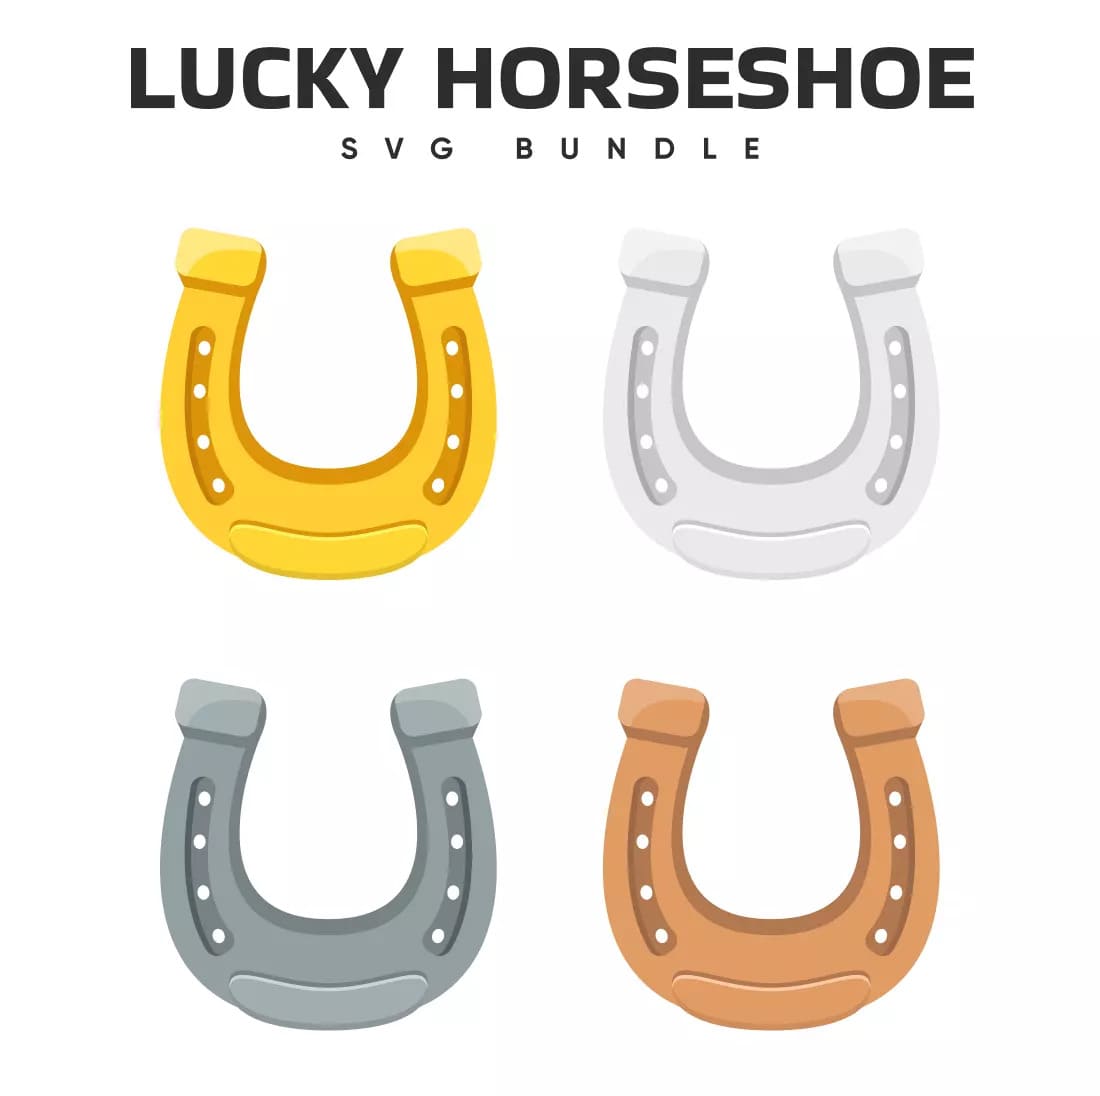 Set of four horseshoes with the words lucky horseshoe svg bundle.